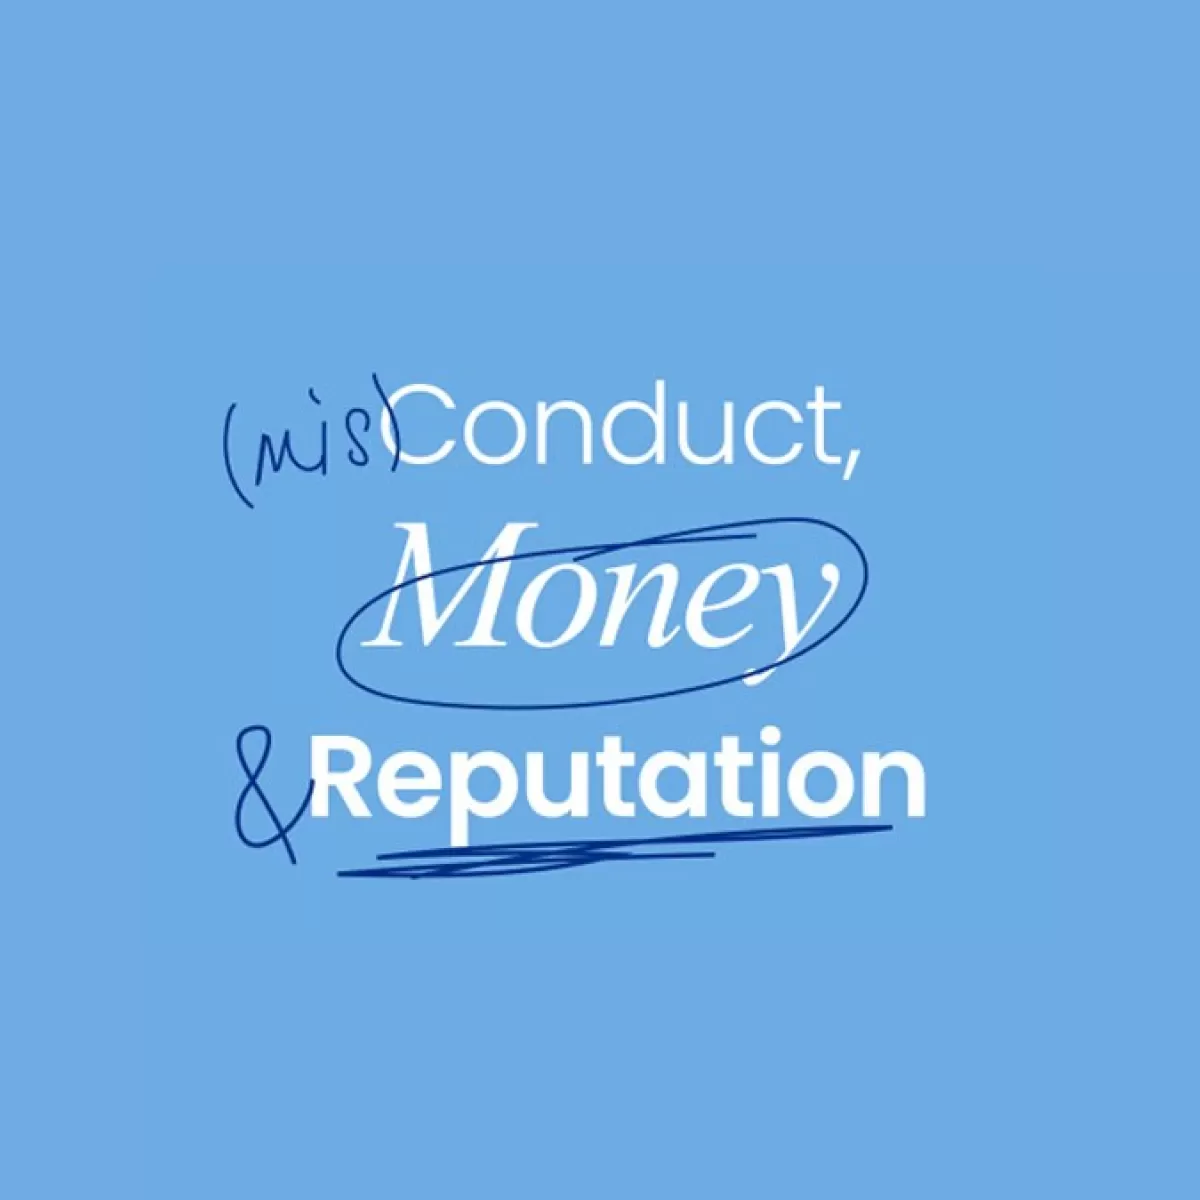 Misconduct money reputation podcast 1200 x 675